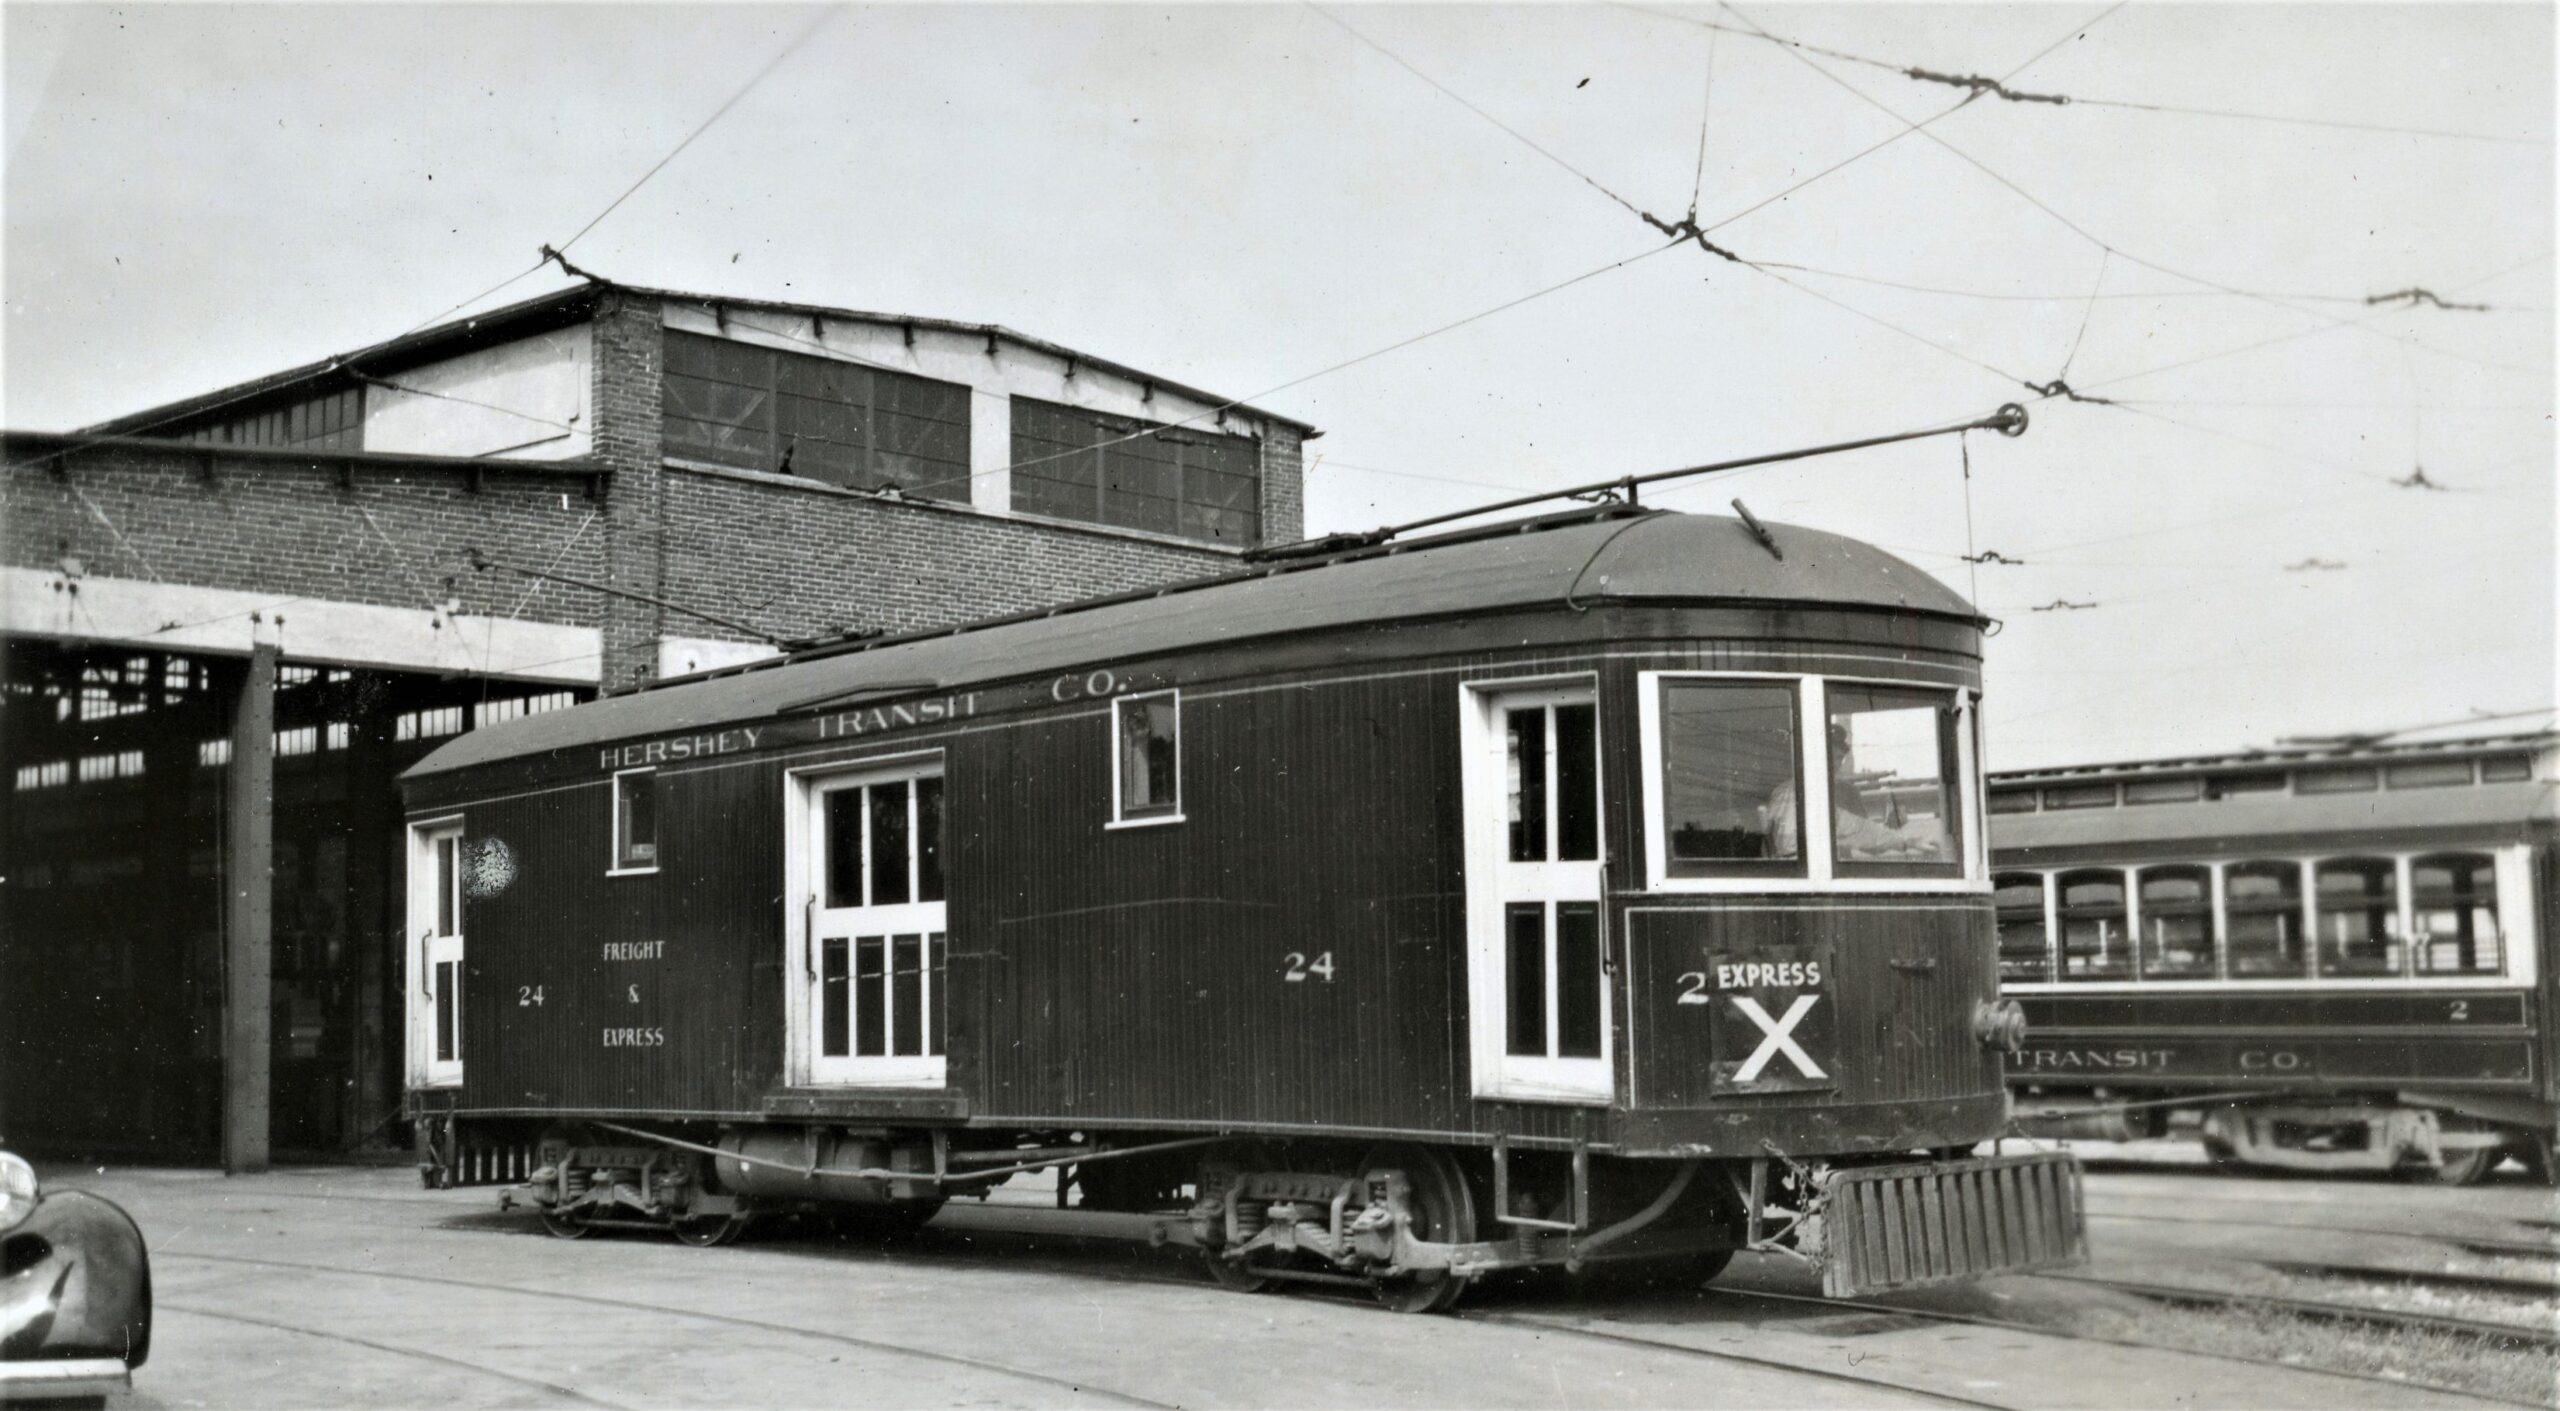 Hershey Transit | Hershey, Pennsylvania | Express Motor Car #24 | Car barn |1939 | Stephen D. Maguire photo